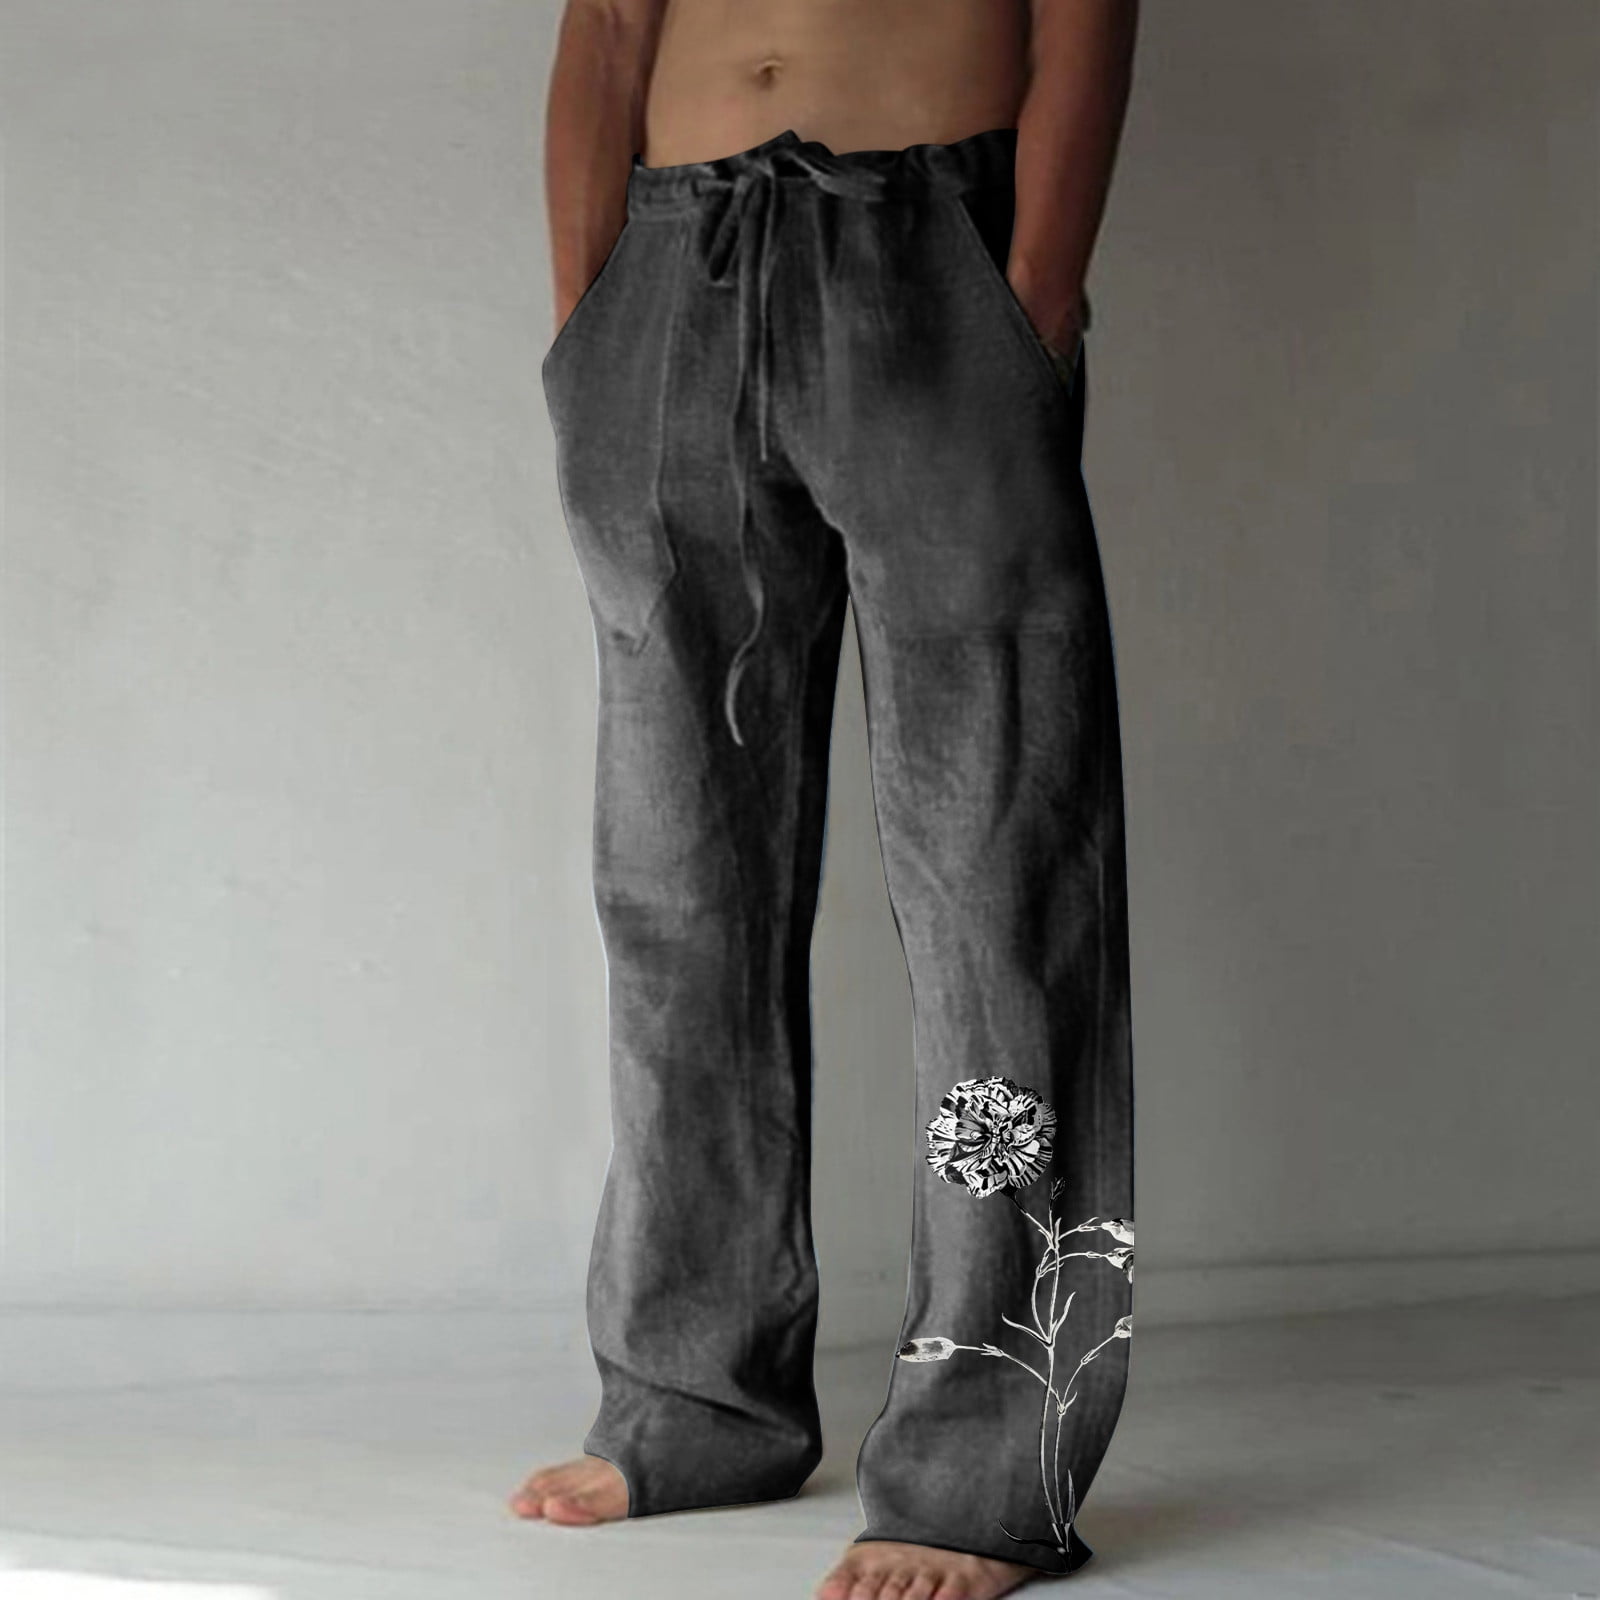 Linen Pants for Men Comfy Fit Pockets Drawcord Wide Leg Sweatpants Beach  Travel Pants Summer Casual Lounge Wear 